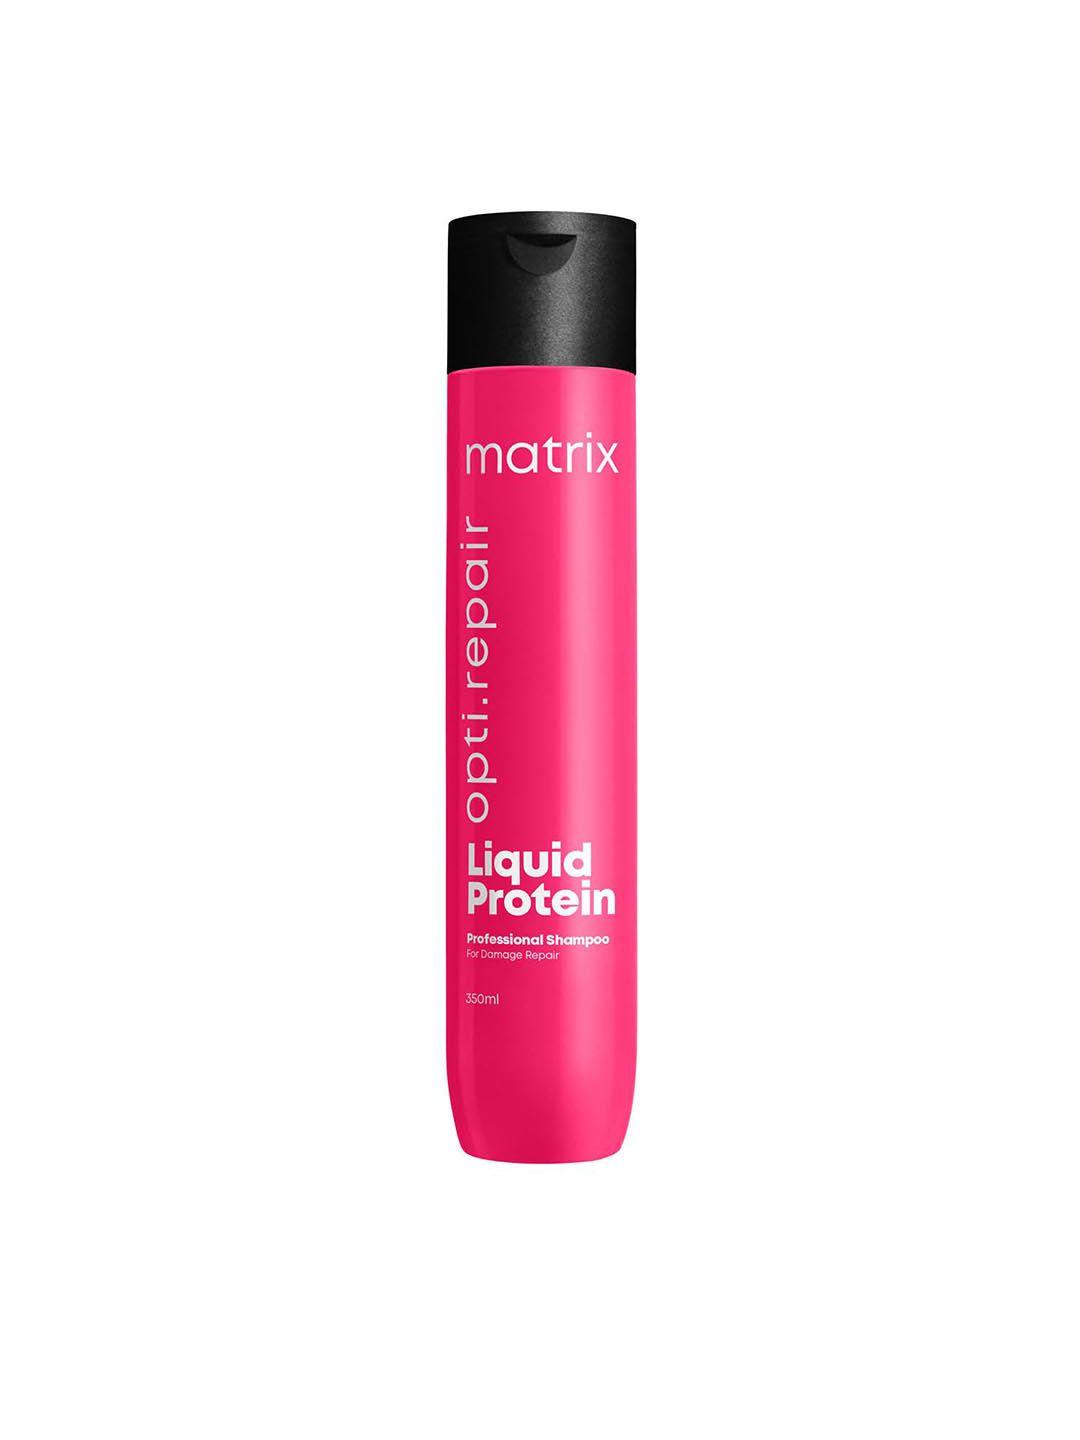 matrix opti repair liquid protein professional shampoo for damage repair - 350 ml